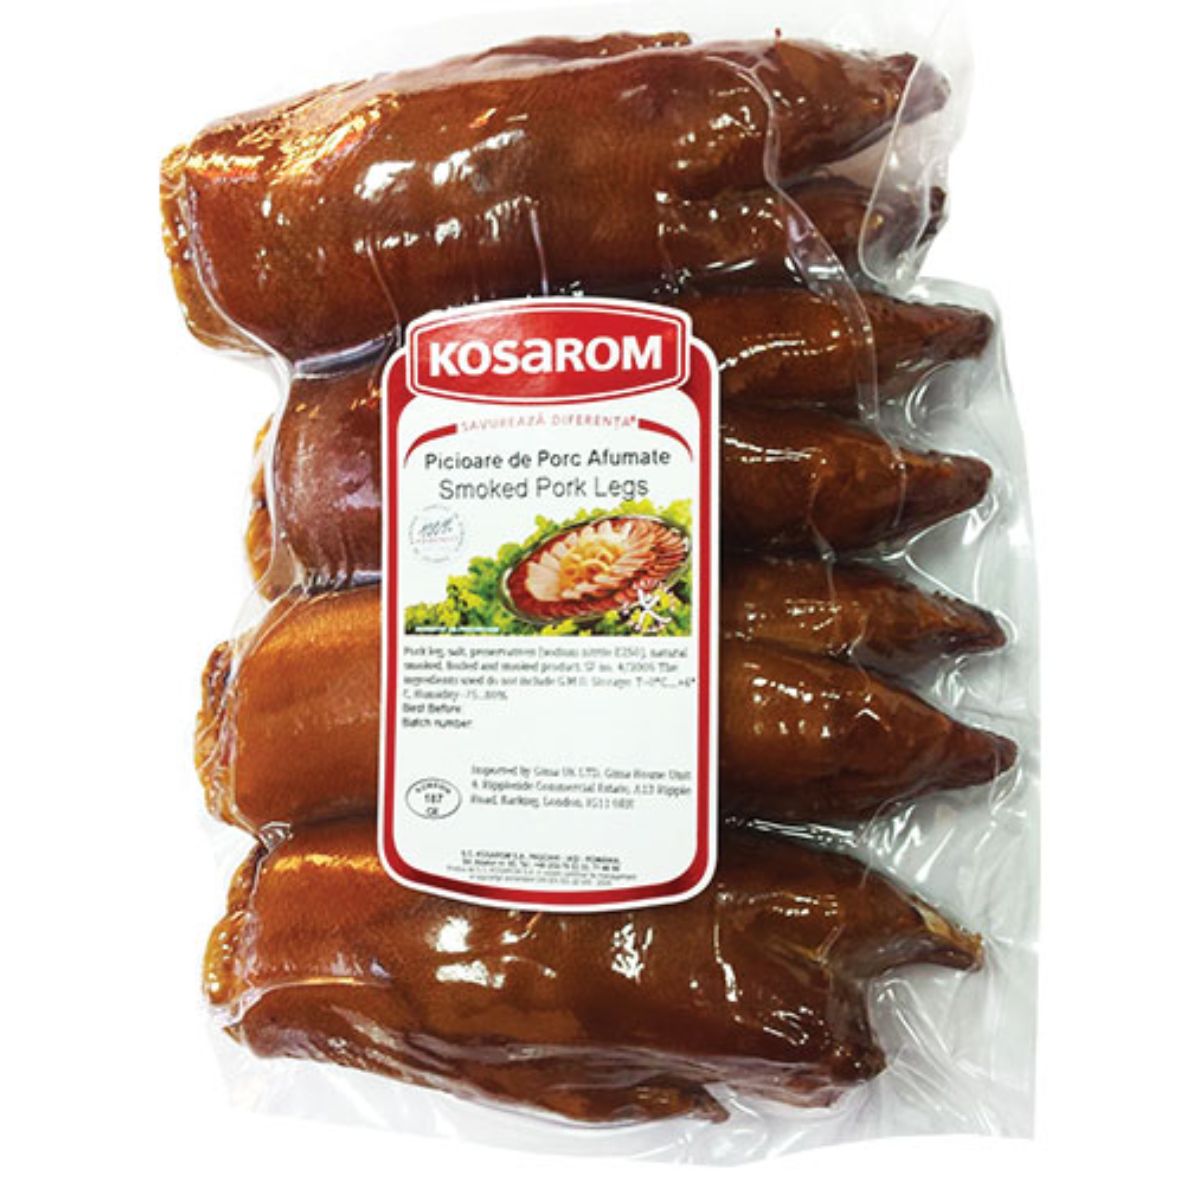 Kosarom smoked pork legs 950g Korean Korean Korean Korean Korean.